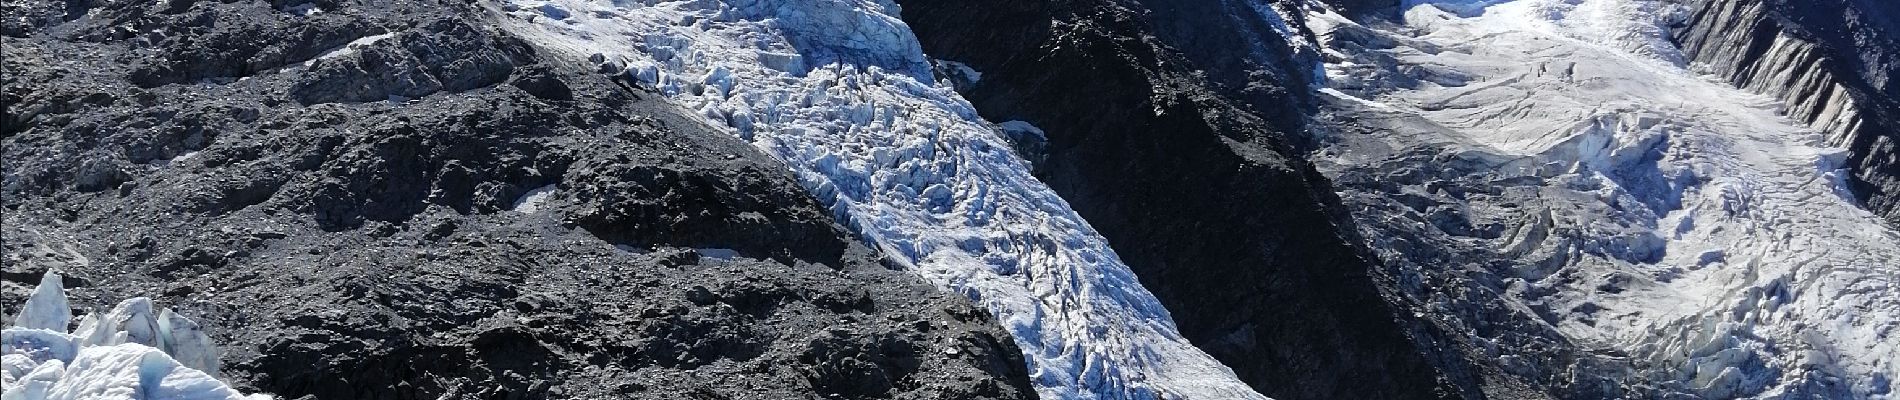 Percorso Marcia Chamonix-Mont-Blanc - Glaciers des Bossons  - Photo